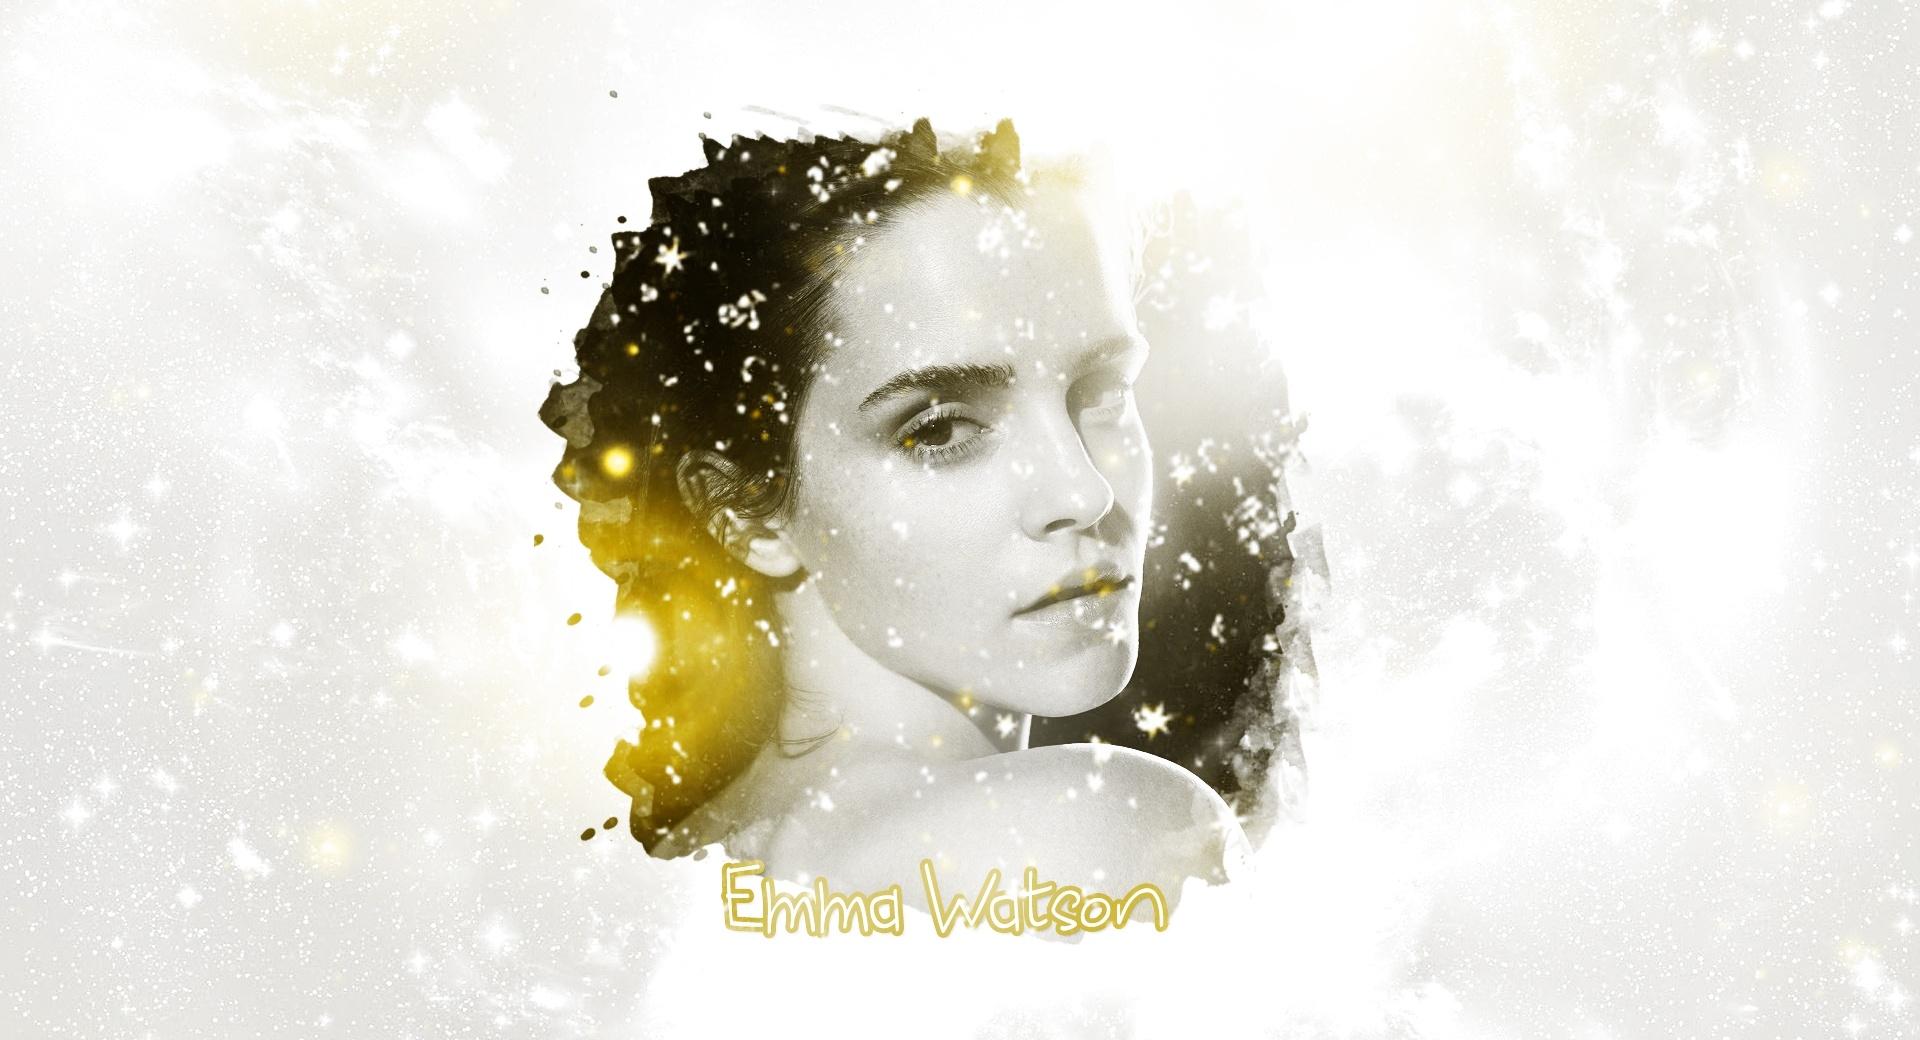 Emma Watson 2013 at 2048 x 2048 iPad size wallpapers HD quality